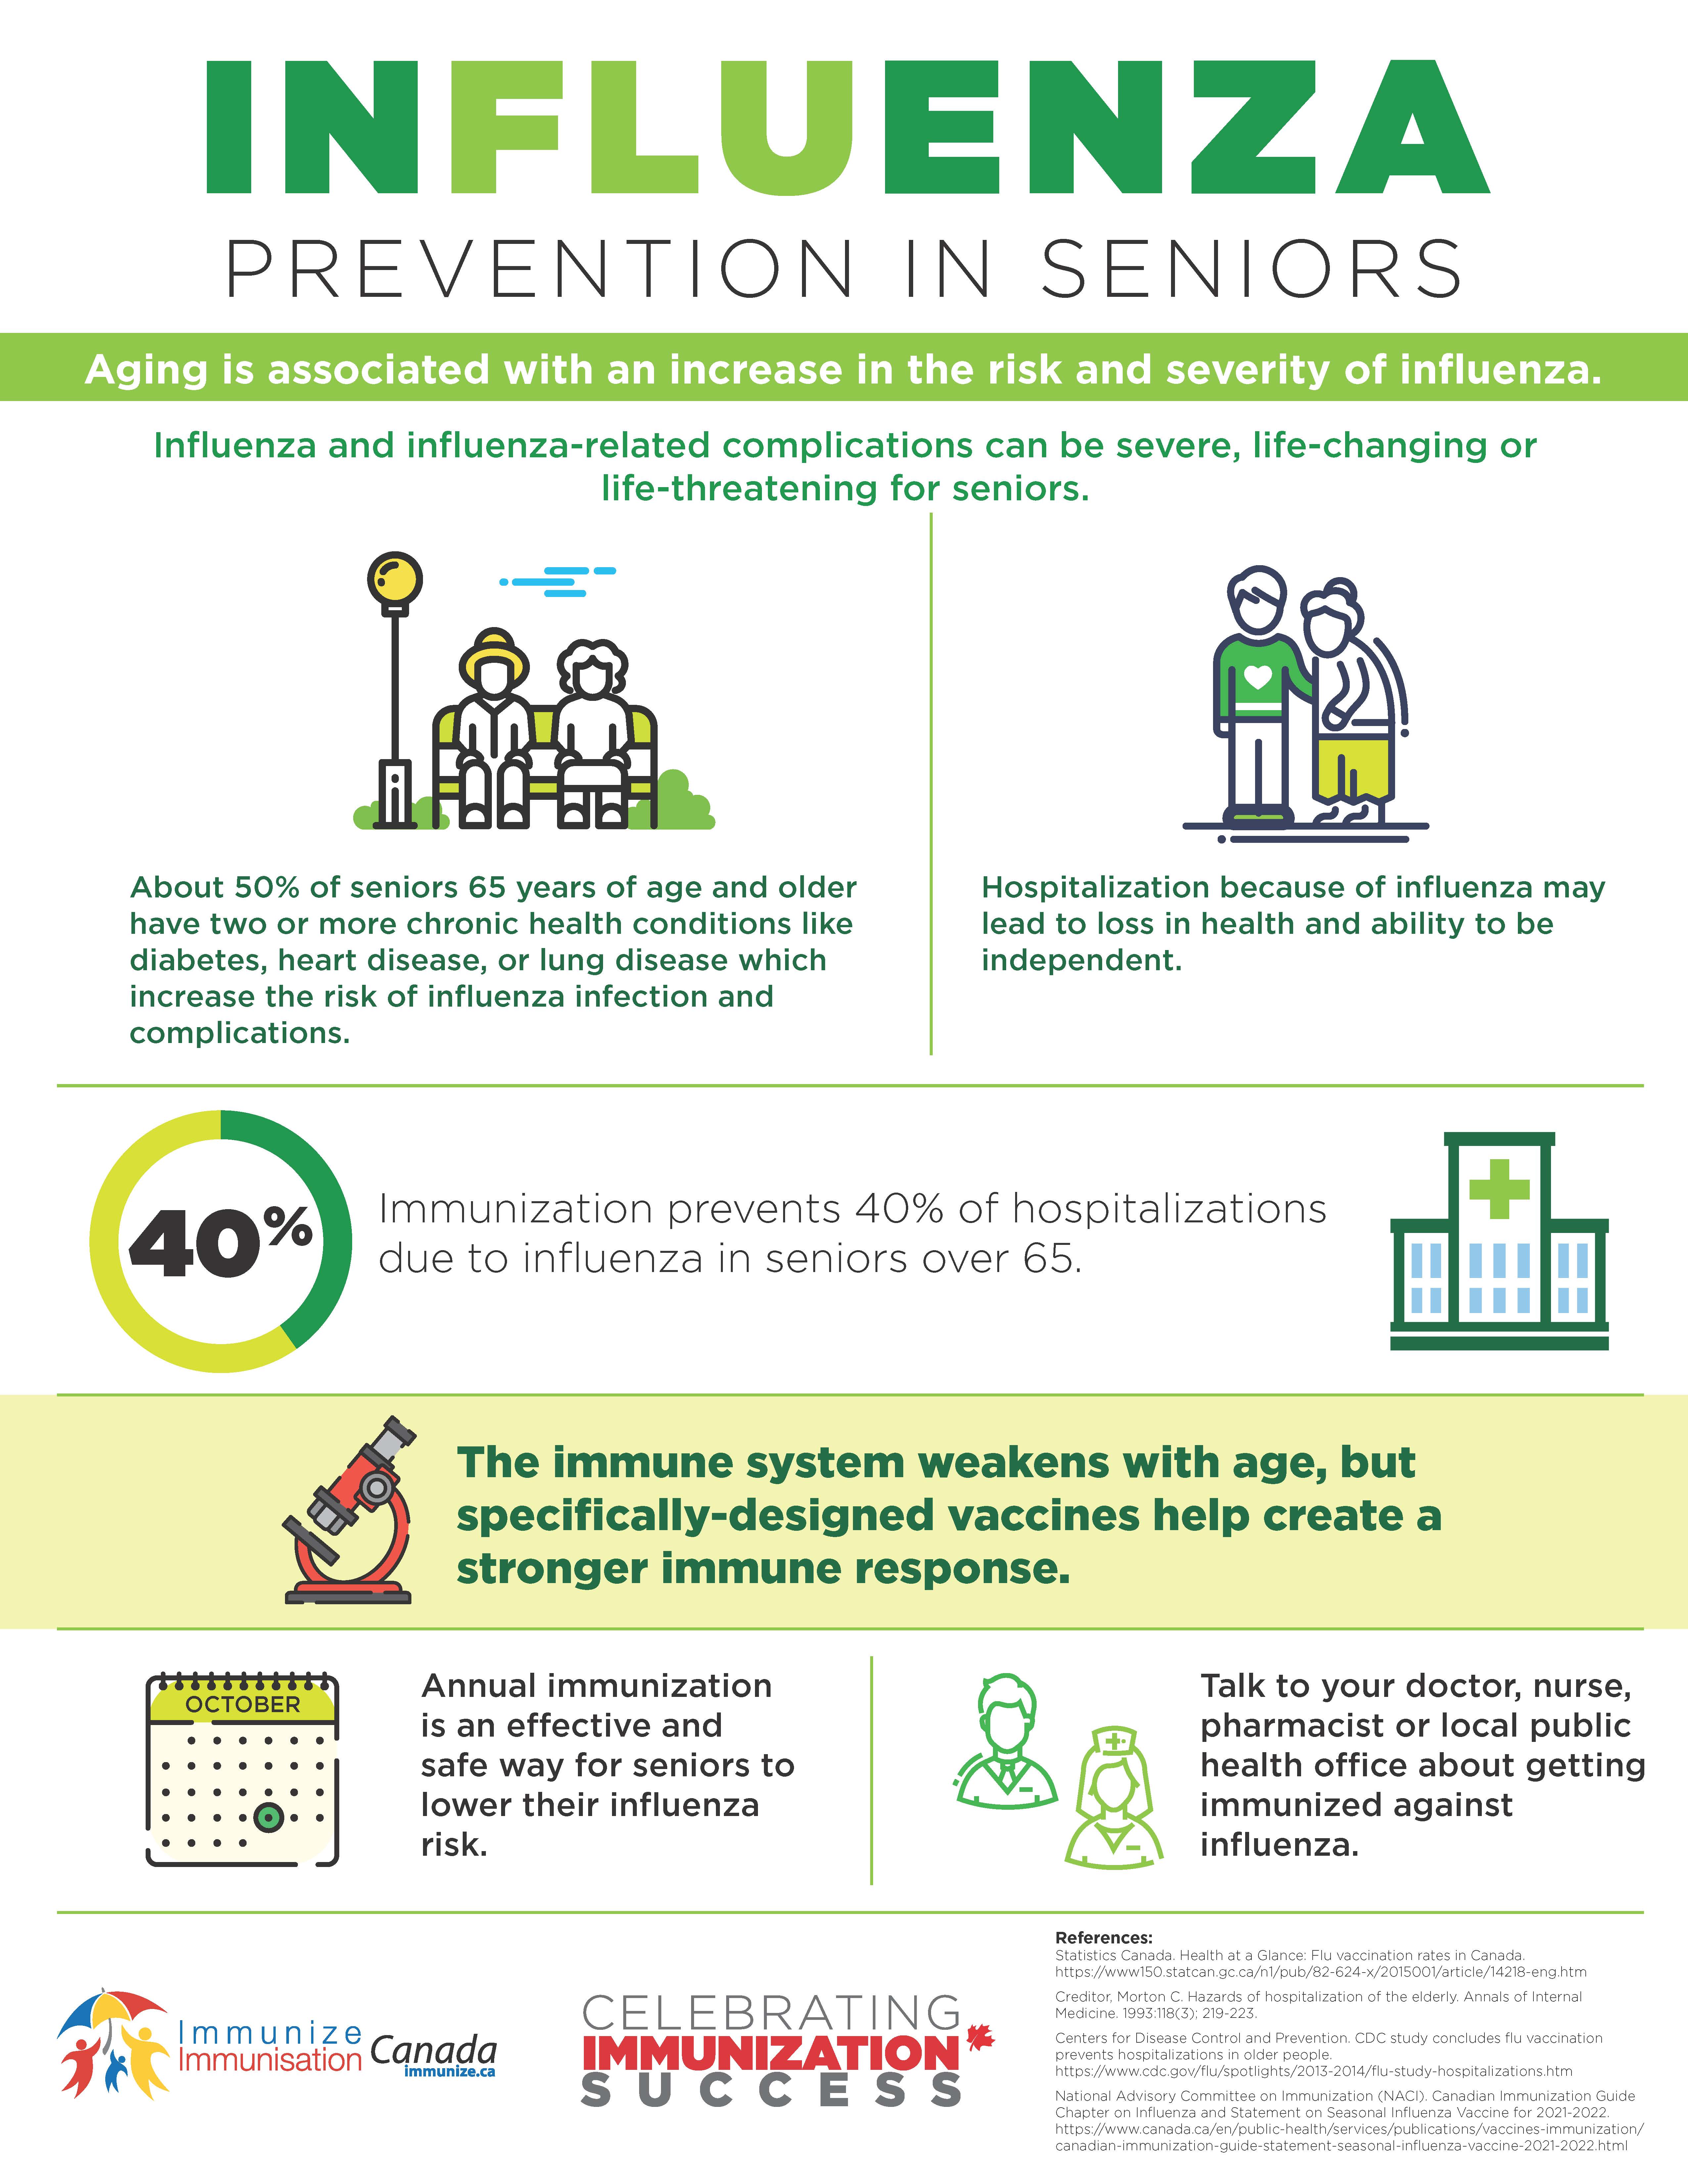 Influenza prevention in seniors - infographic